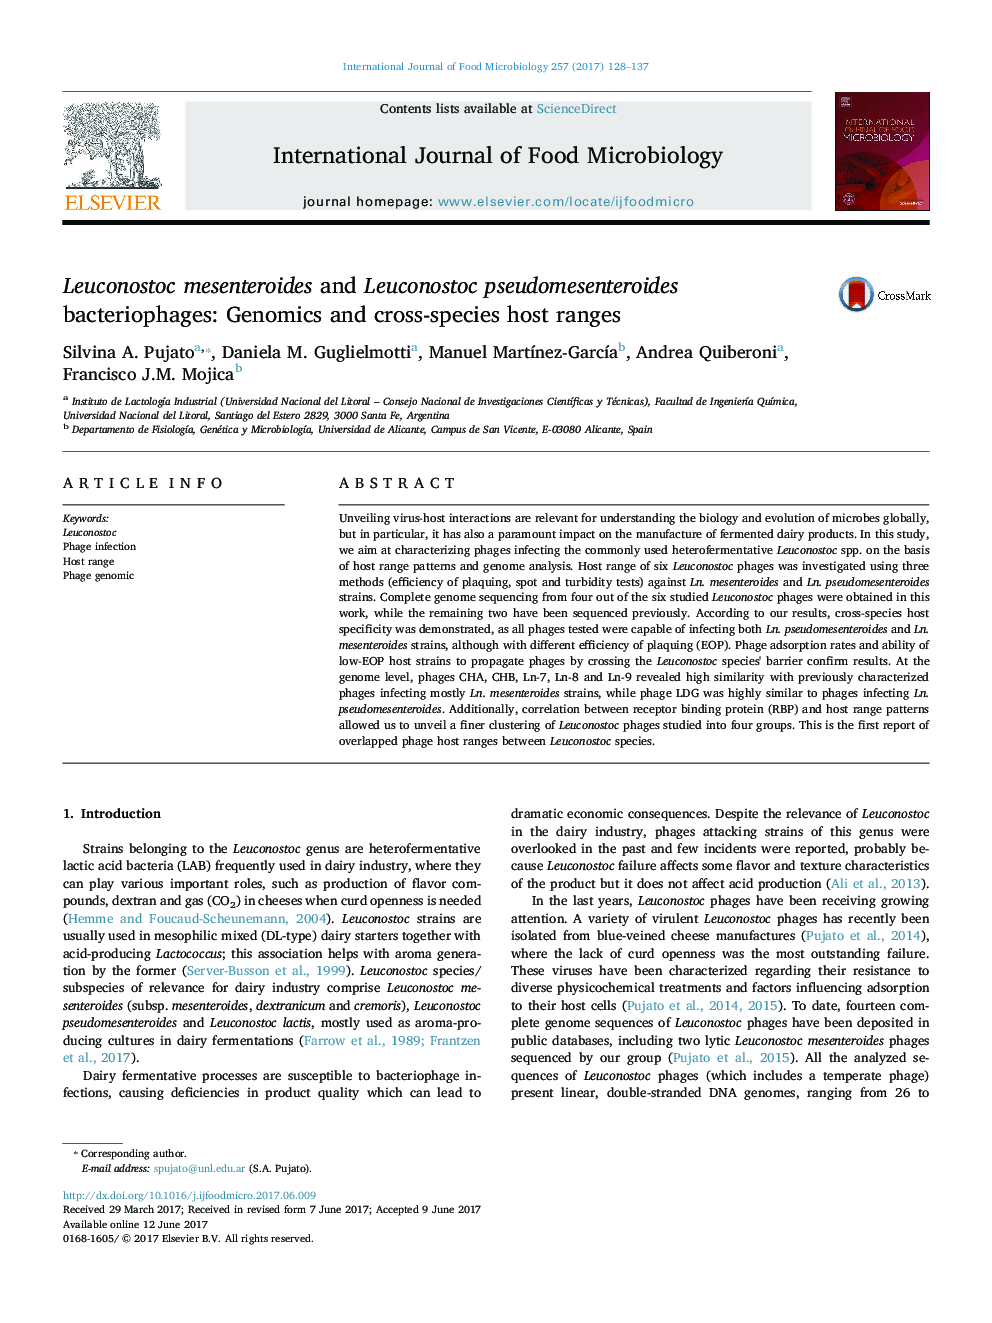 Leuconostoc mesenteroides and Leuconostoc pseudomesenteroides bacteriophages: Genomics and cross-species host ranges